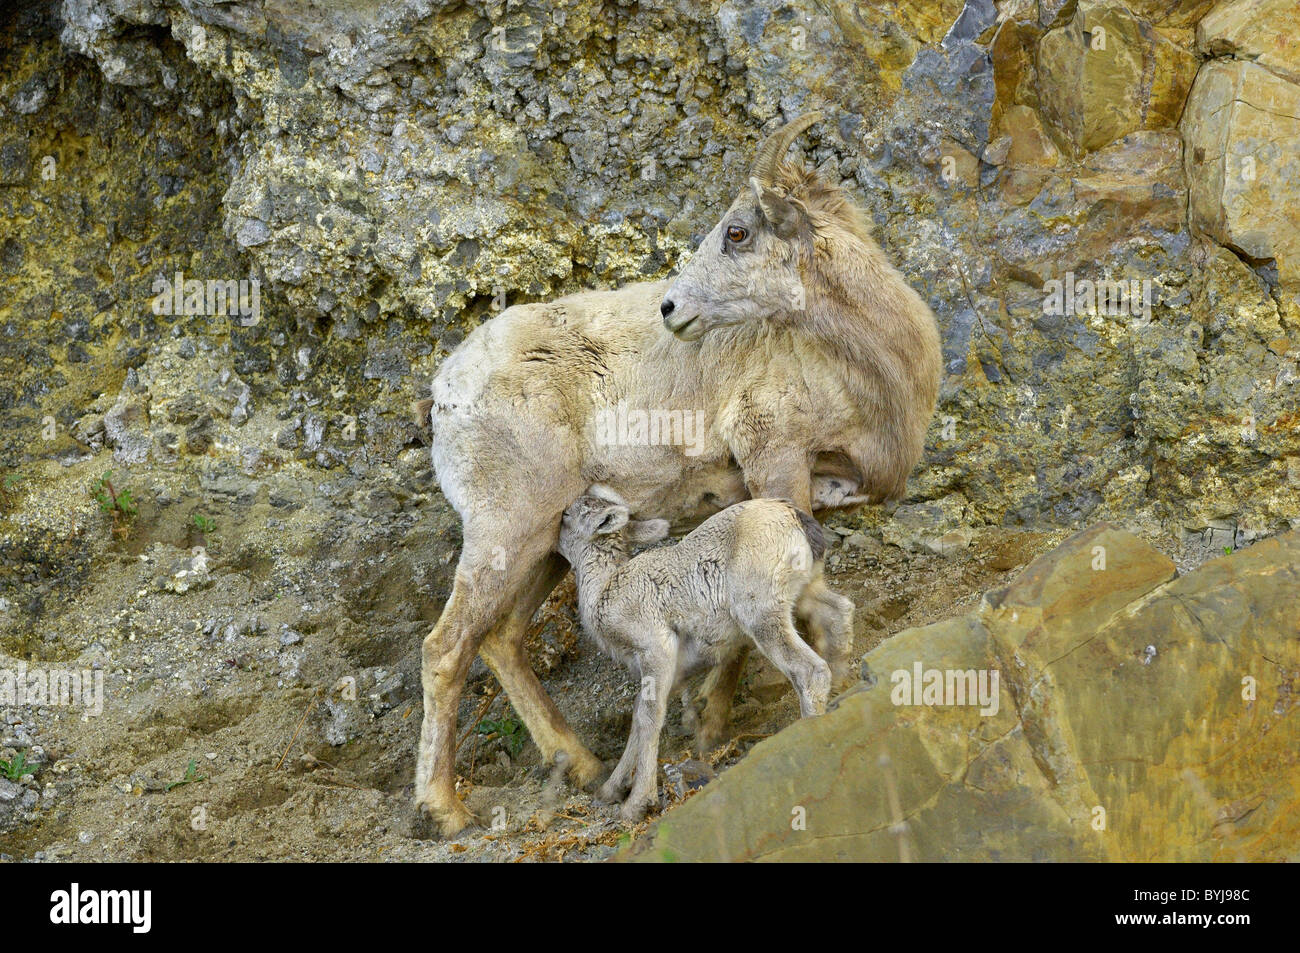 Bighorn Sheep mother nursing her baby. Stock Photo